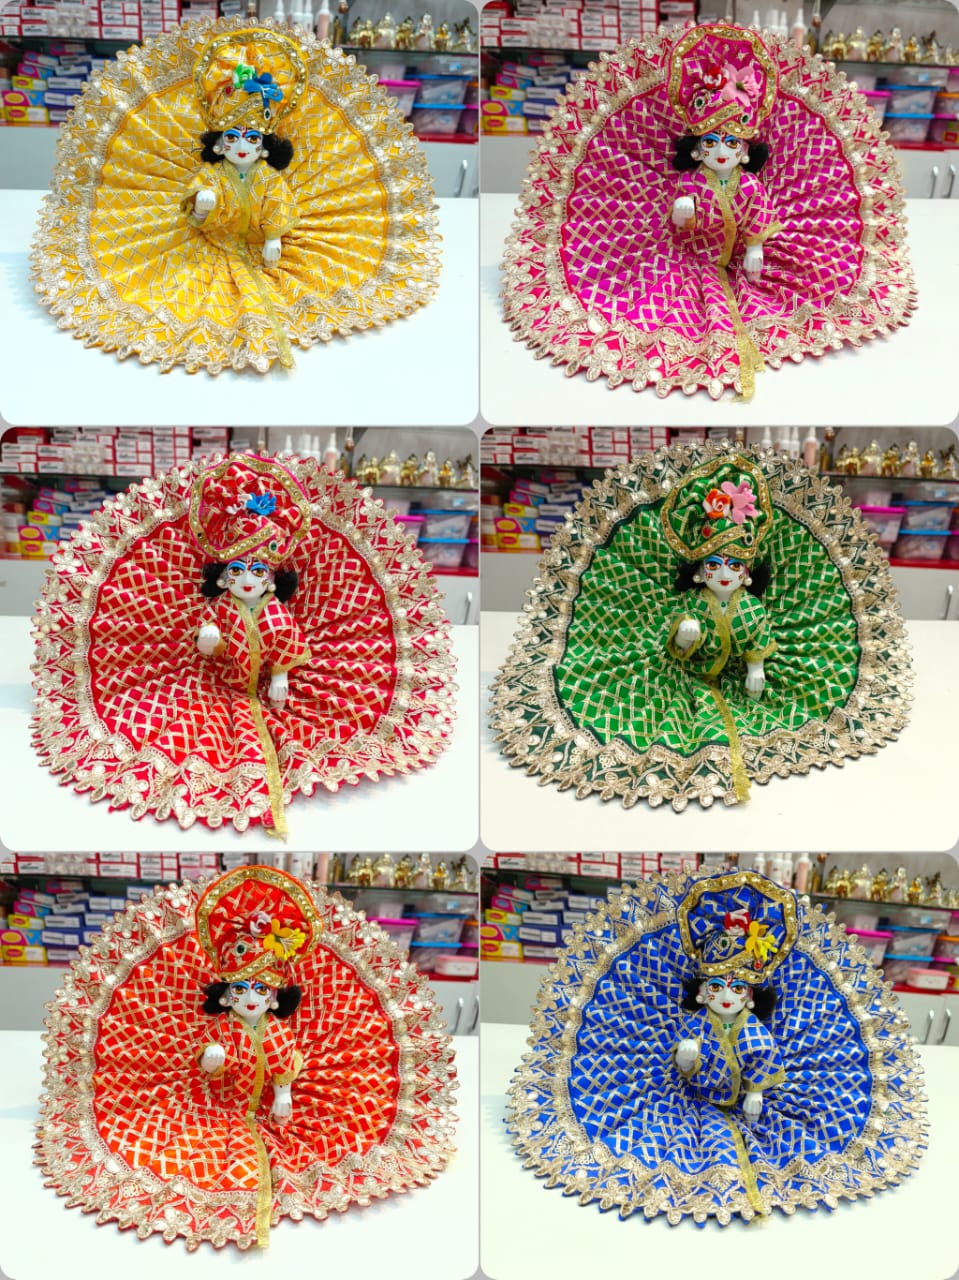 Lovely Laddu Gopal Thakur ji Kanha ji Dress Poshak Hare Krishna Janamshtami  Gift | eBay